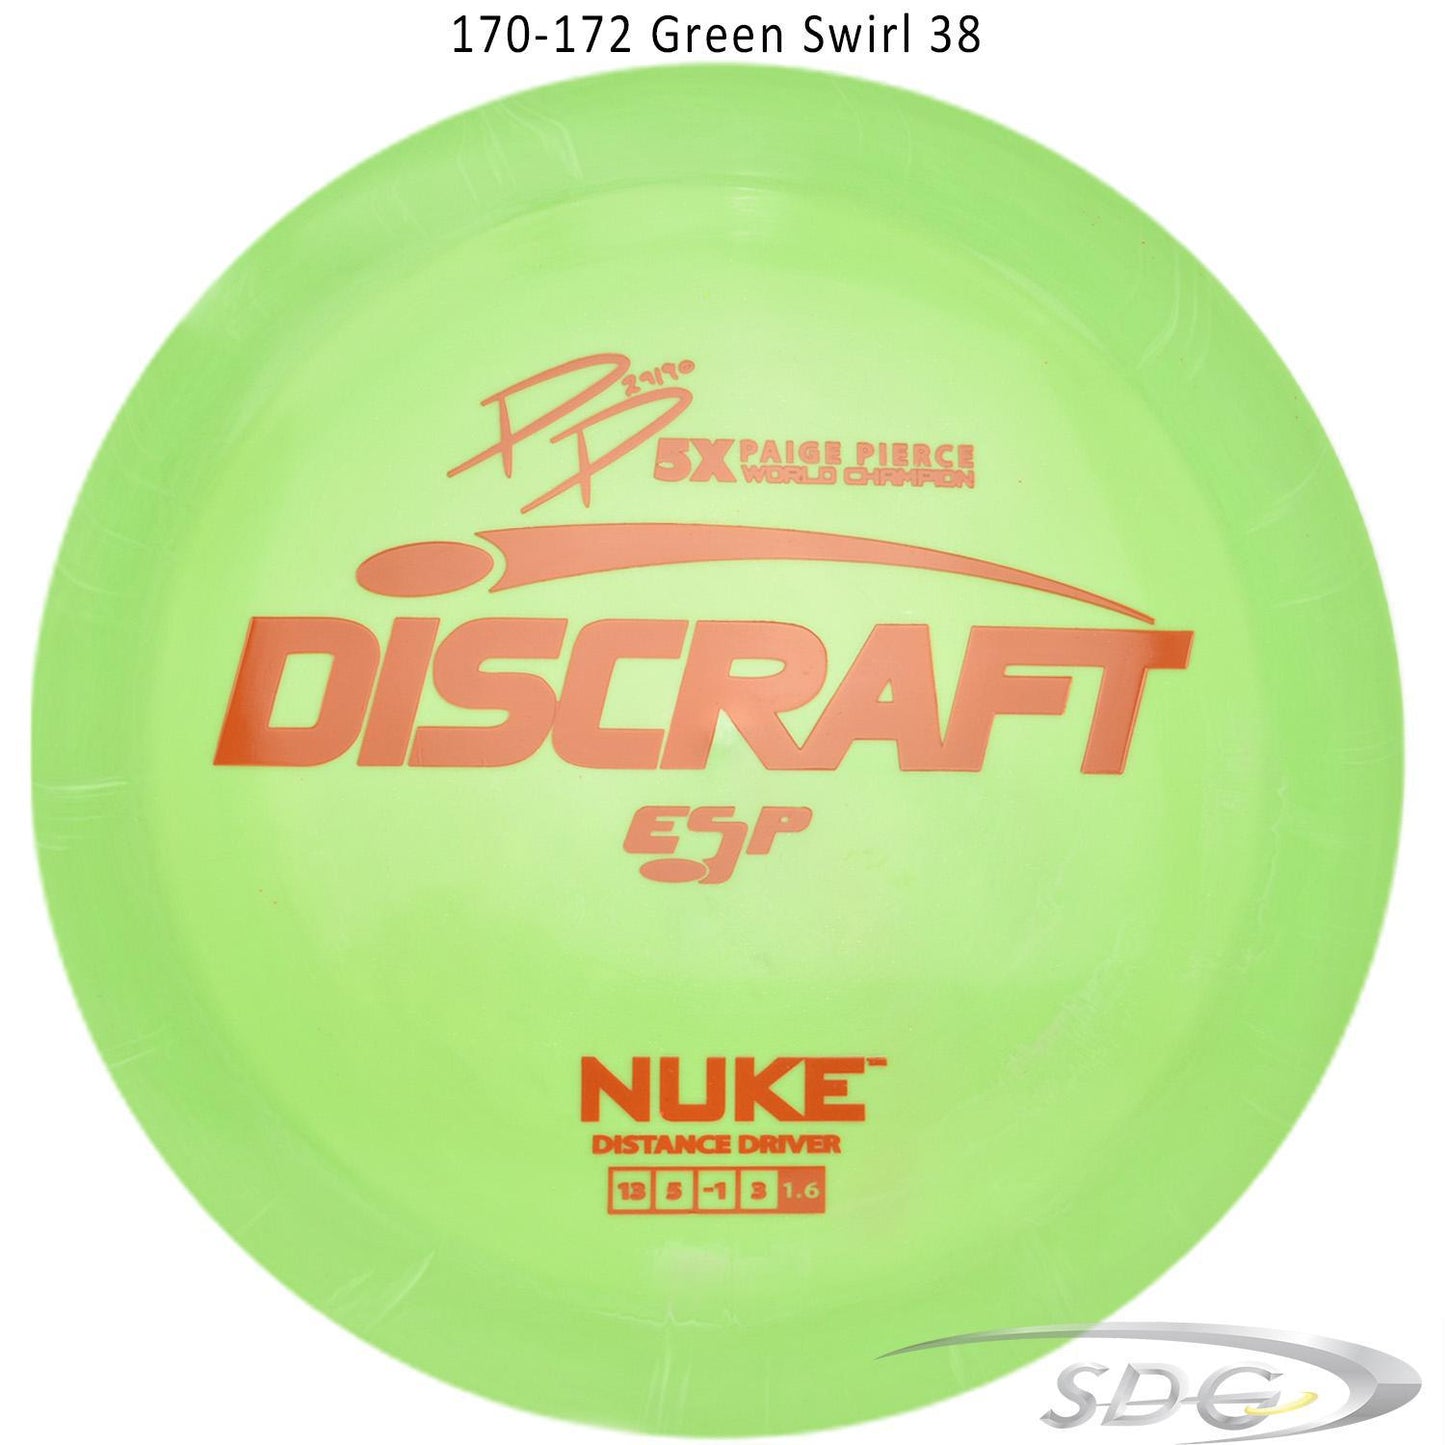 discraft-esp-nuke-paige-pierce-signature-disc-golf-distance-driver 170-172 Green Swirl 38